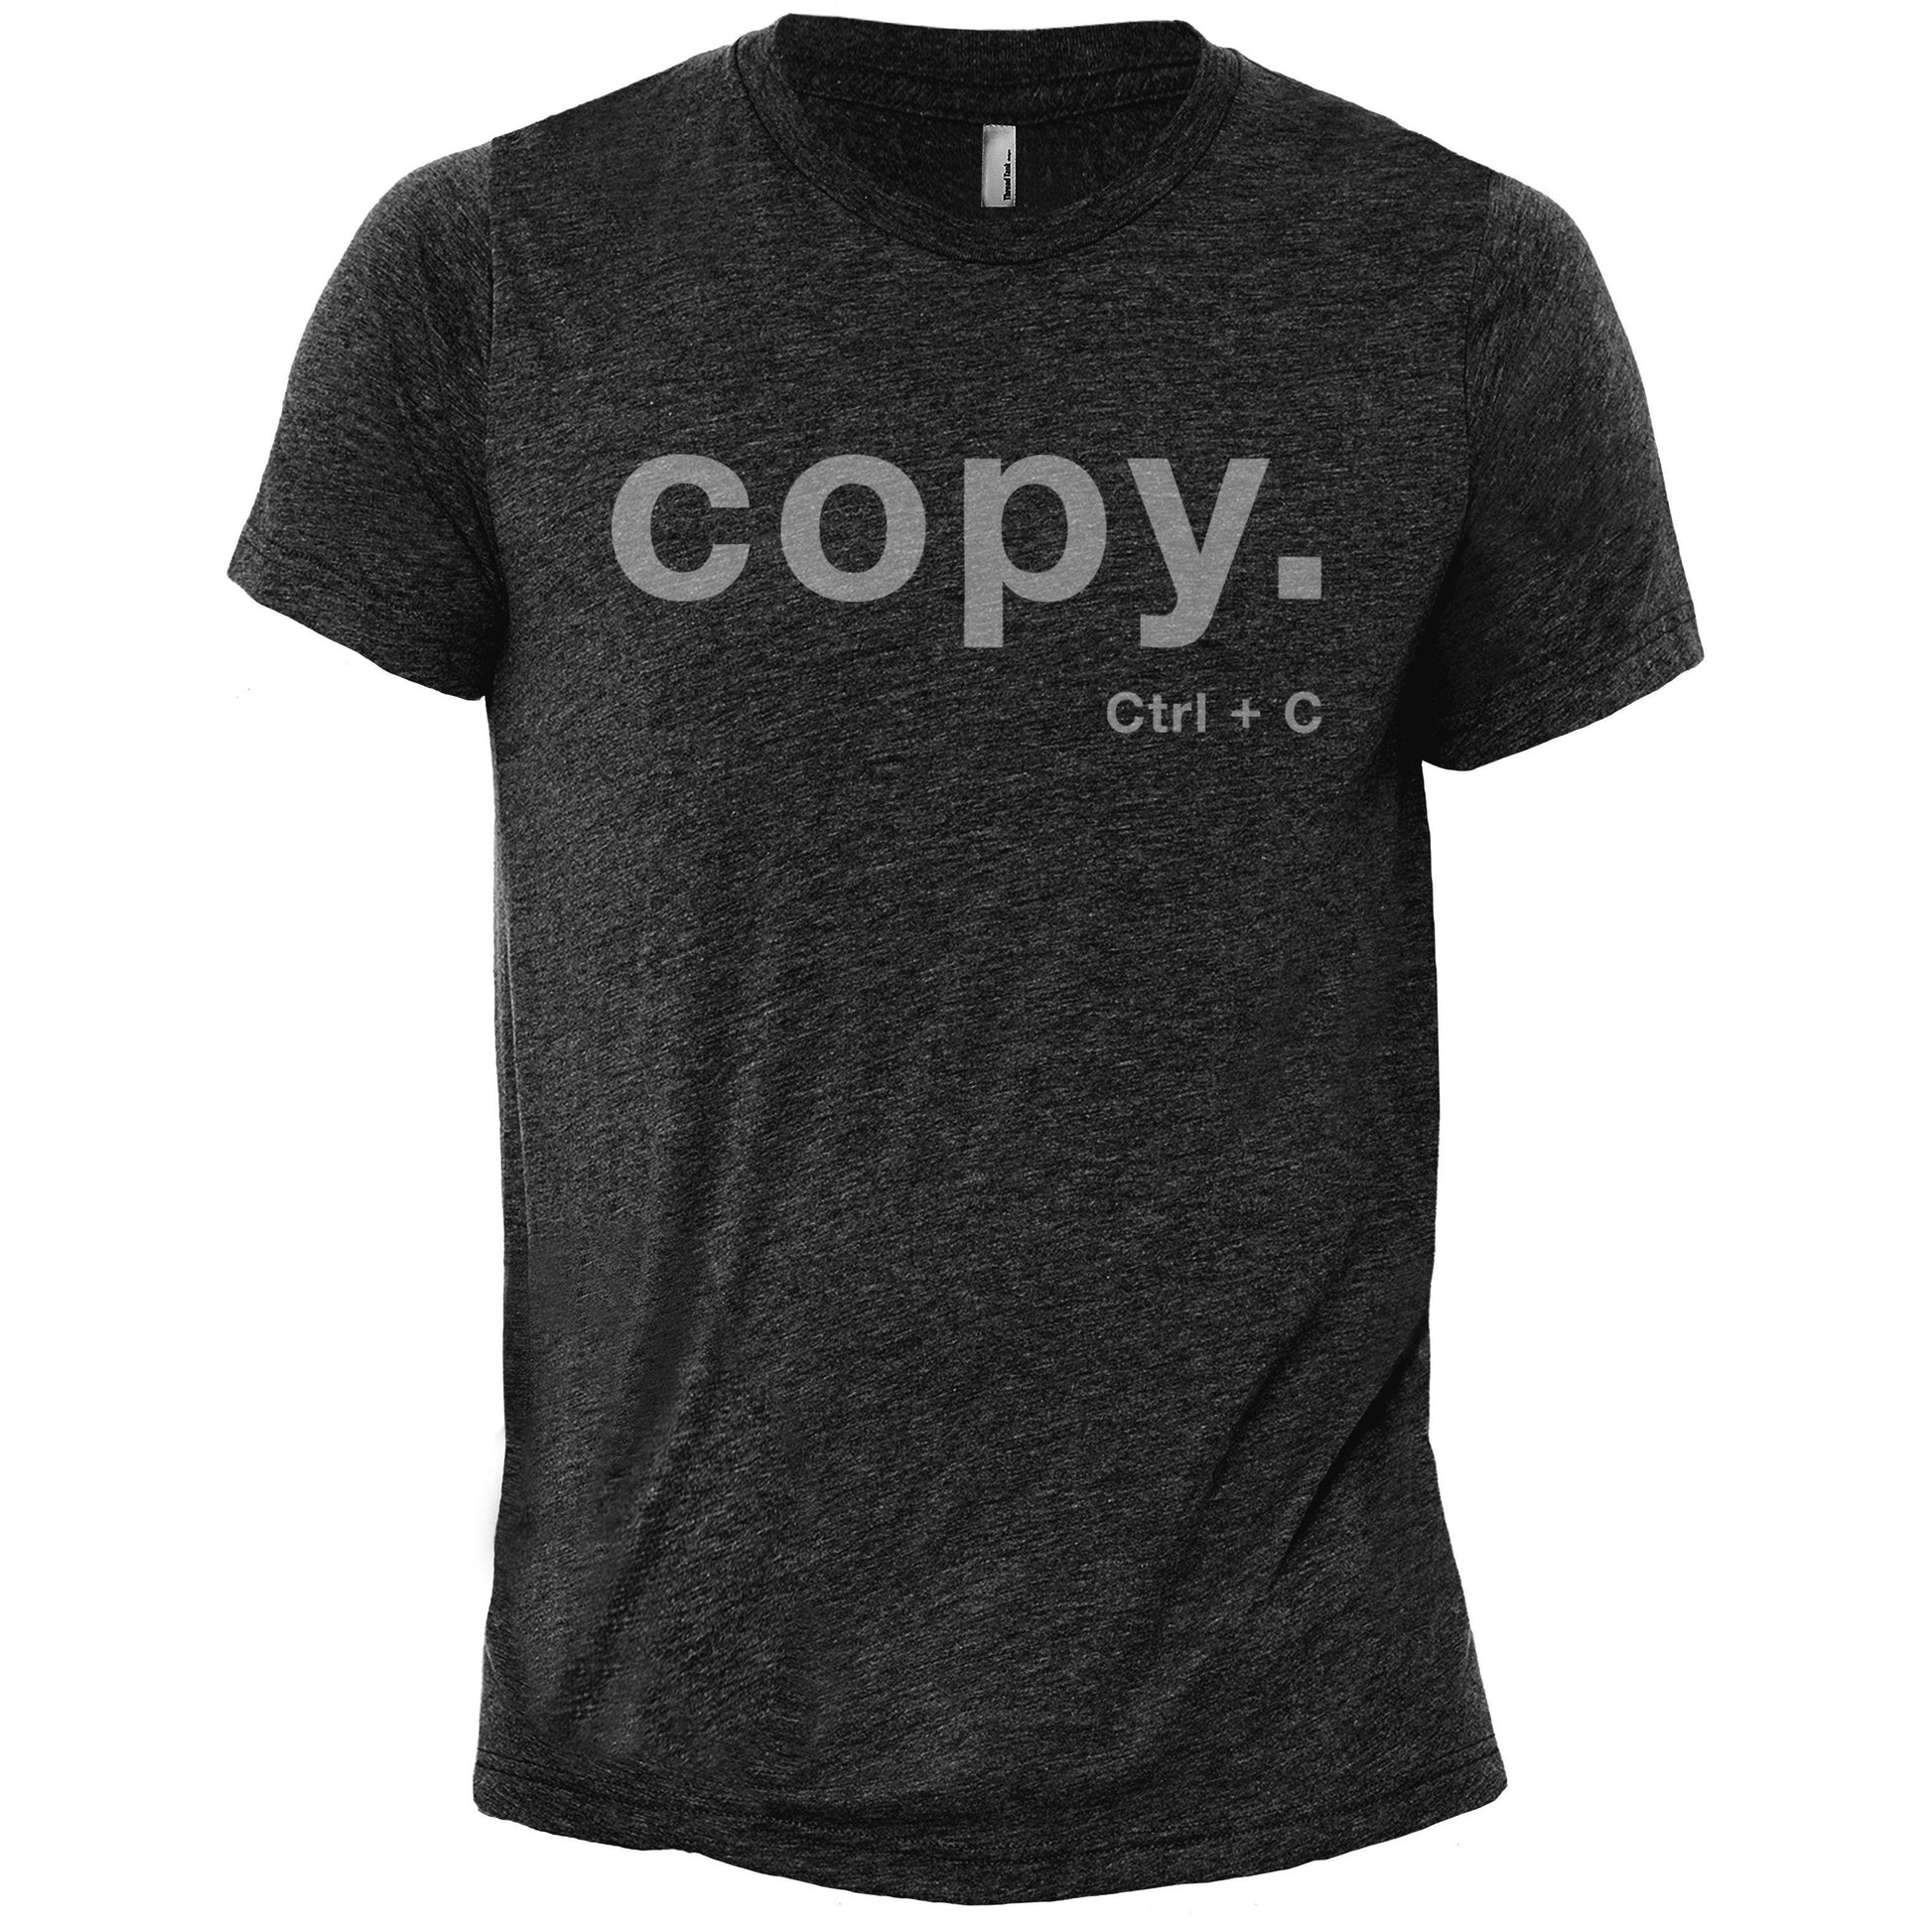 Copy CTRL C Charcoal Printed Graphic Men's Crew T-Shirt Tee